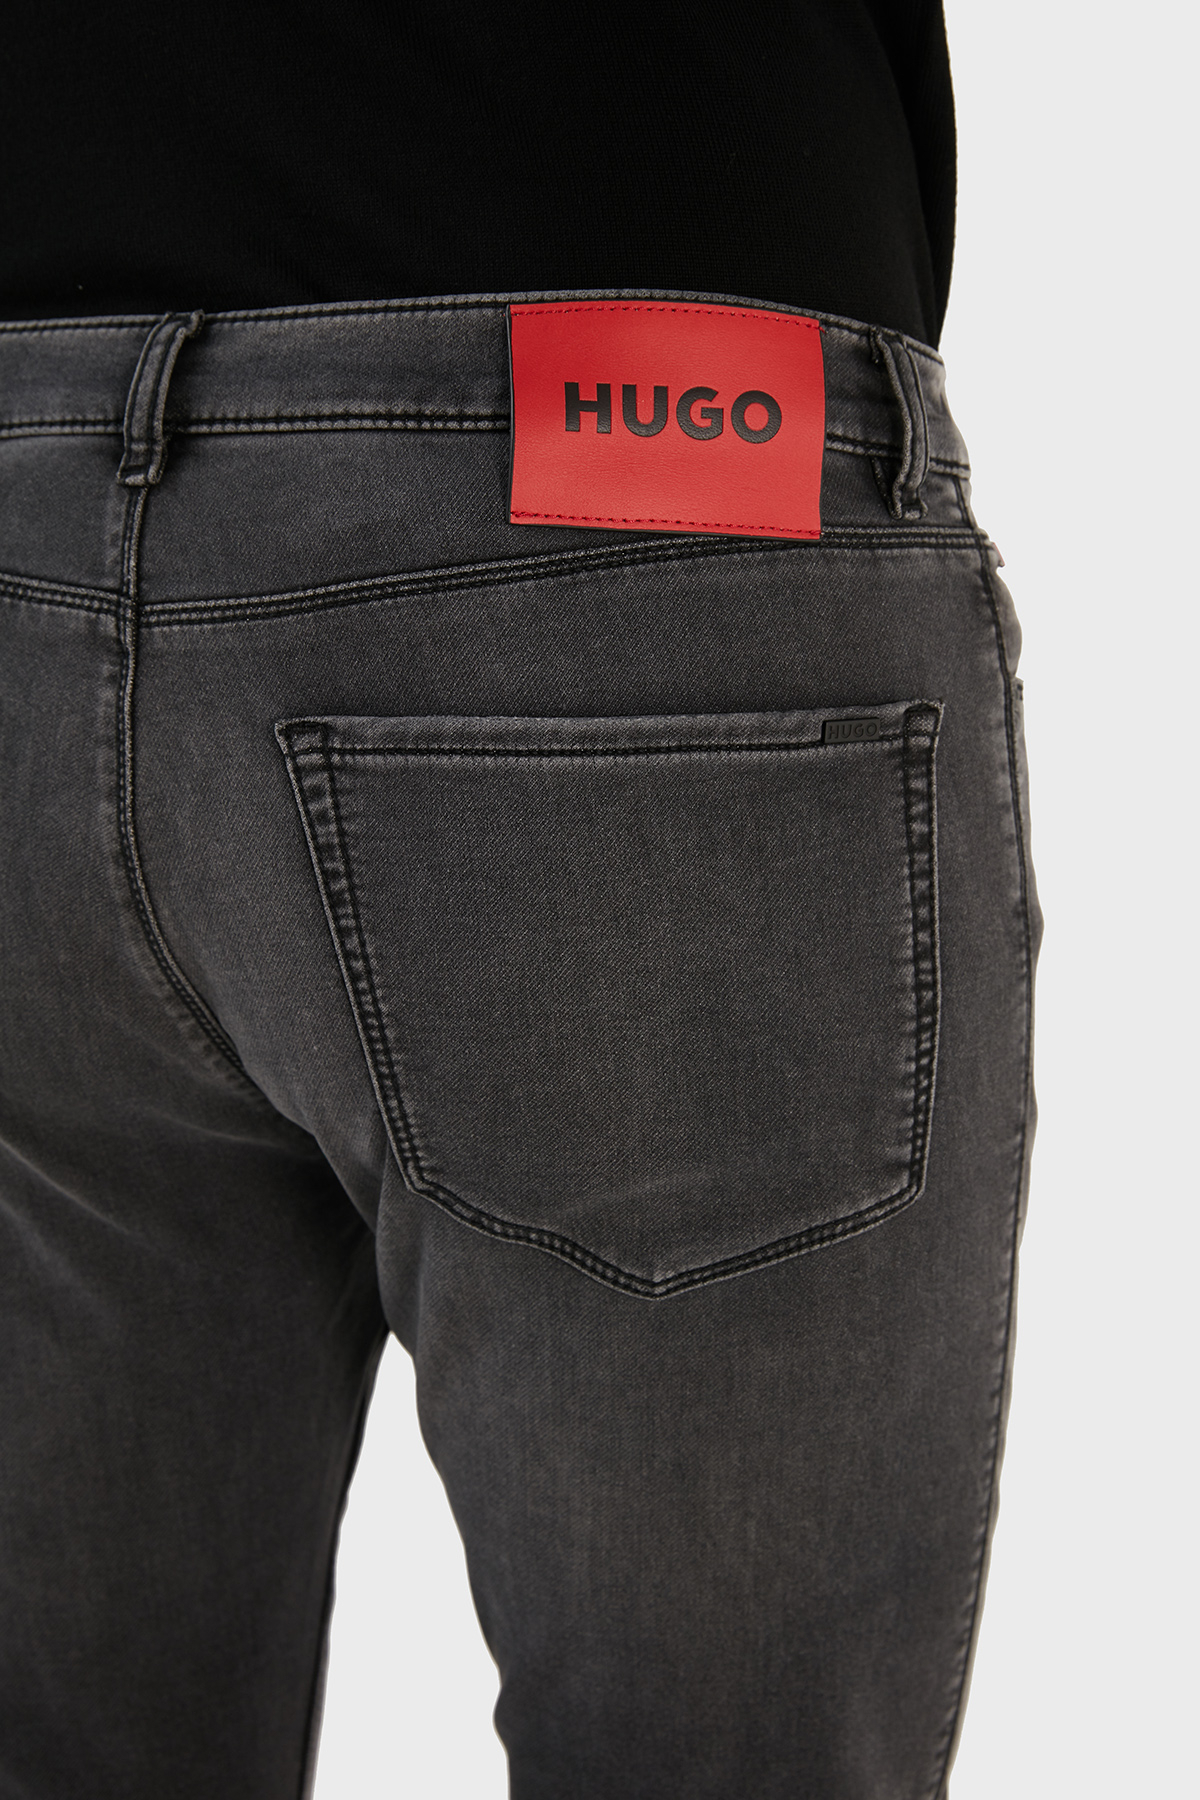 Hugo Pamuklu Slim Fit Dar Paça Jeans Erkek Kot Pantolon 50476199 021 GRİ